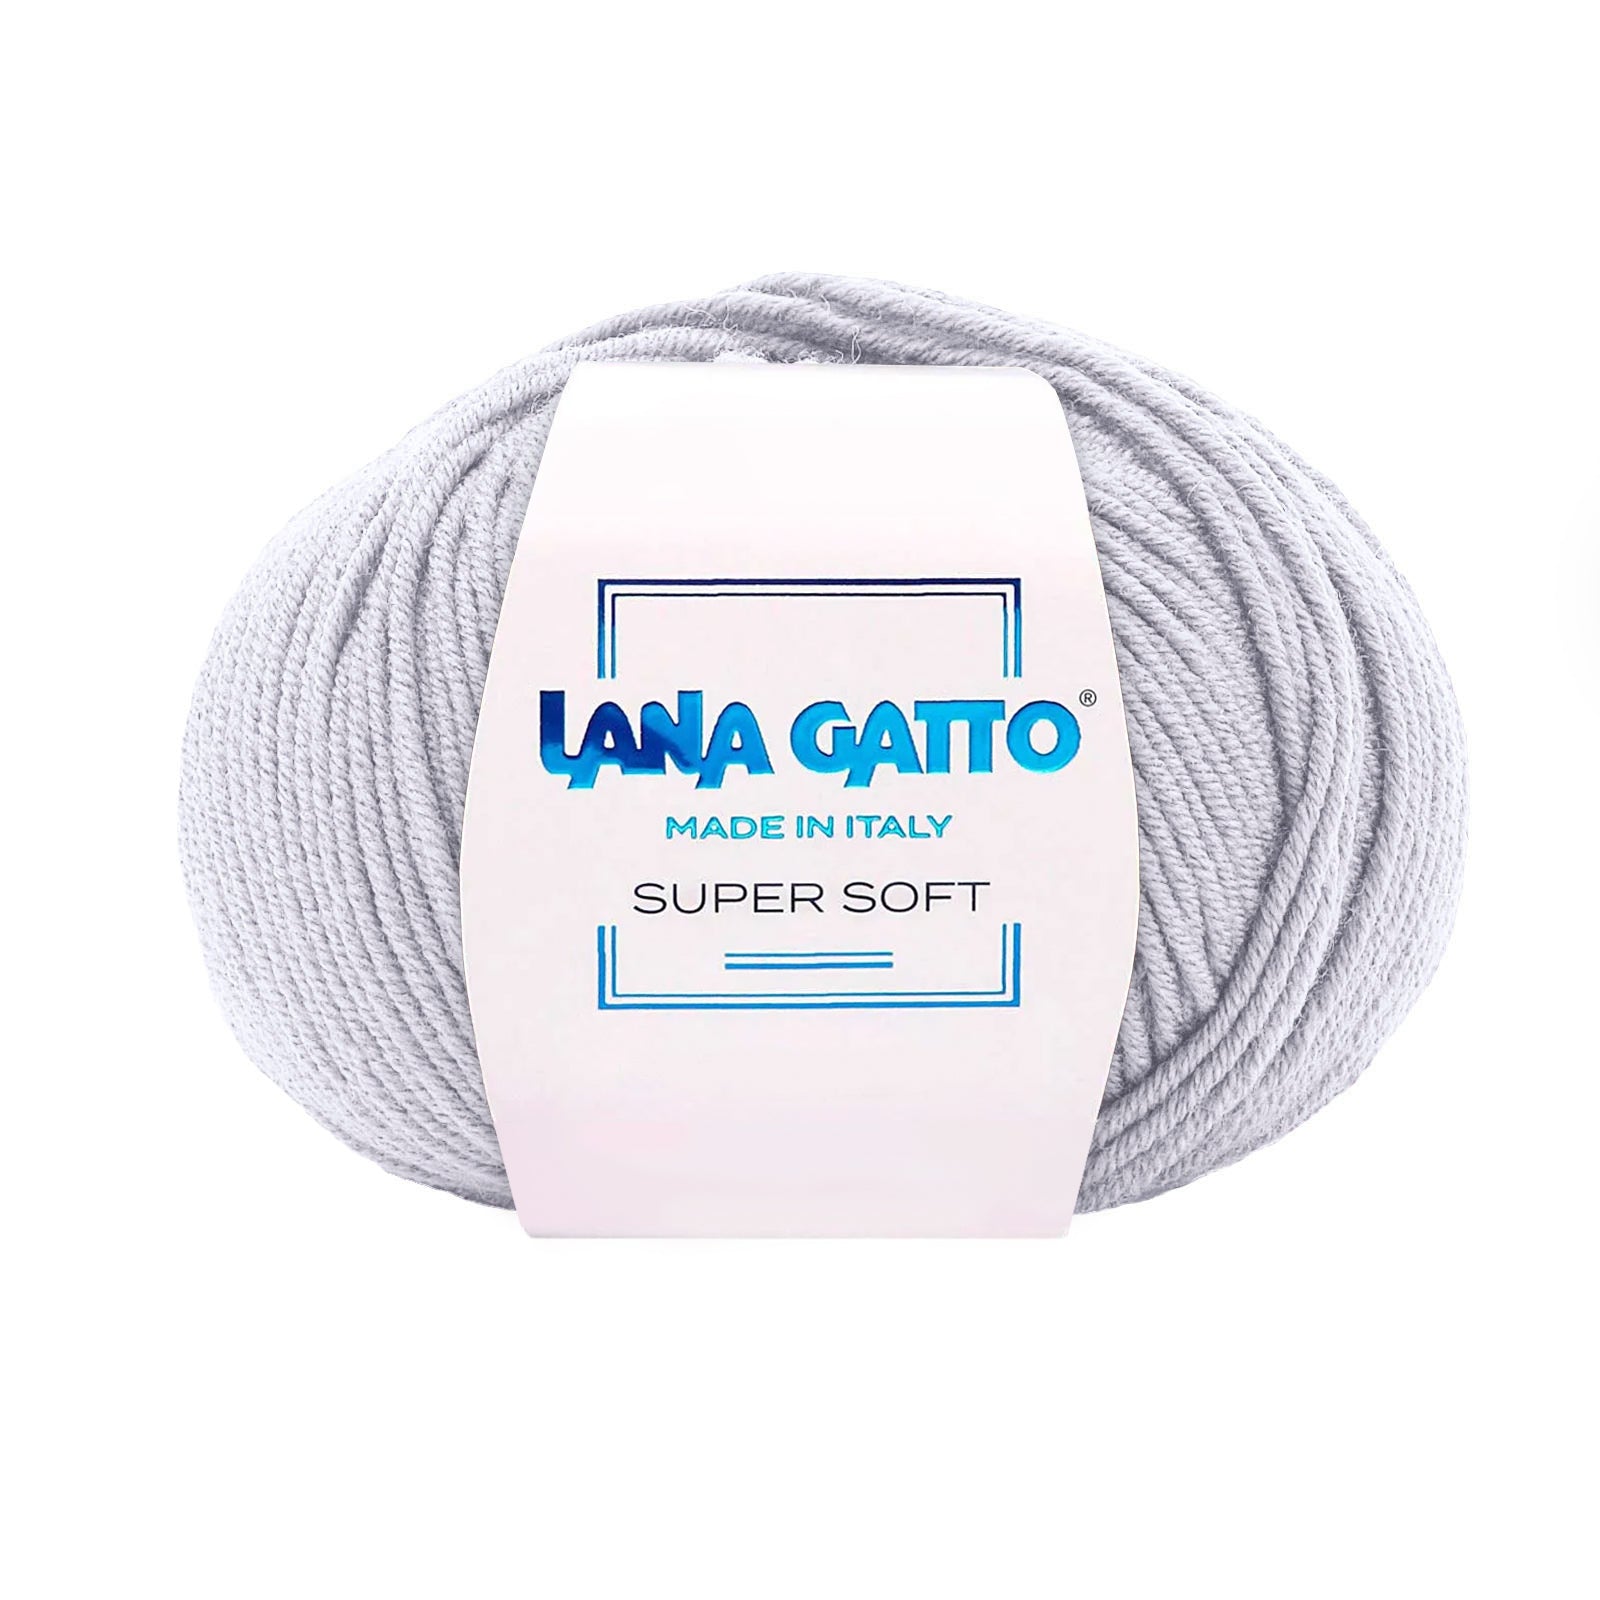 100% Pure Virgin Merino Wool Extrafine, Lana Gatto Super Soft Line - Cool Colors